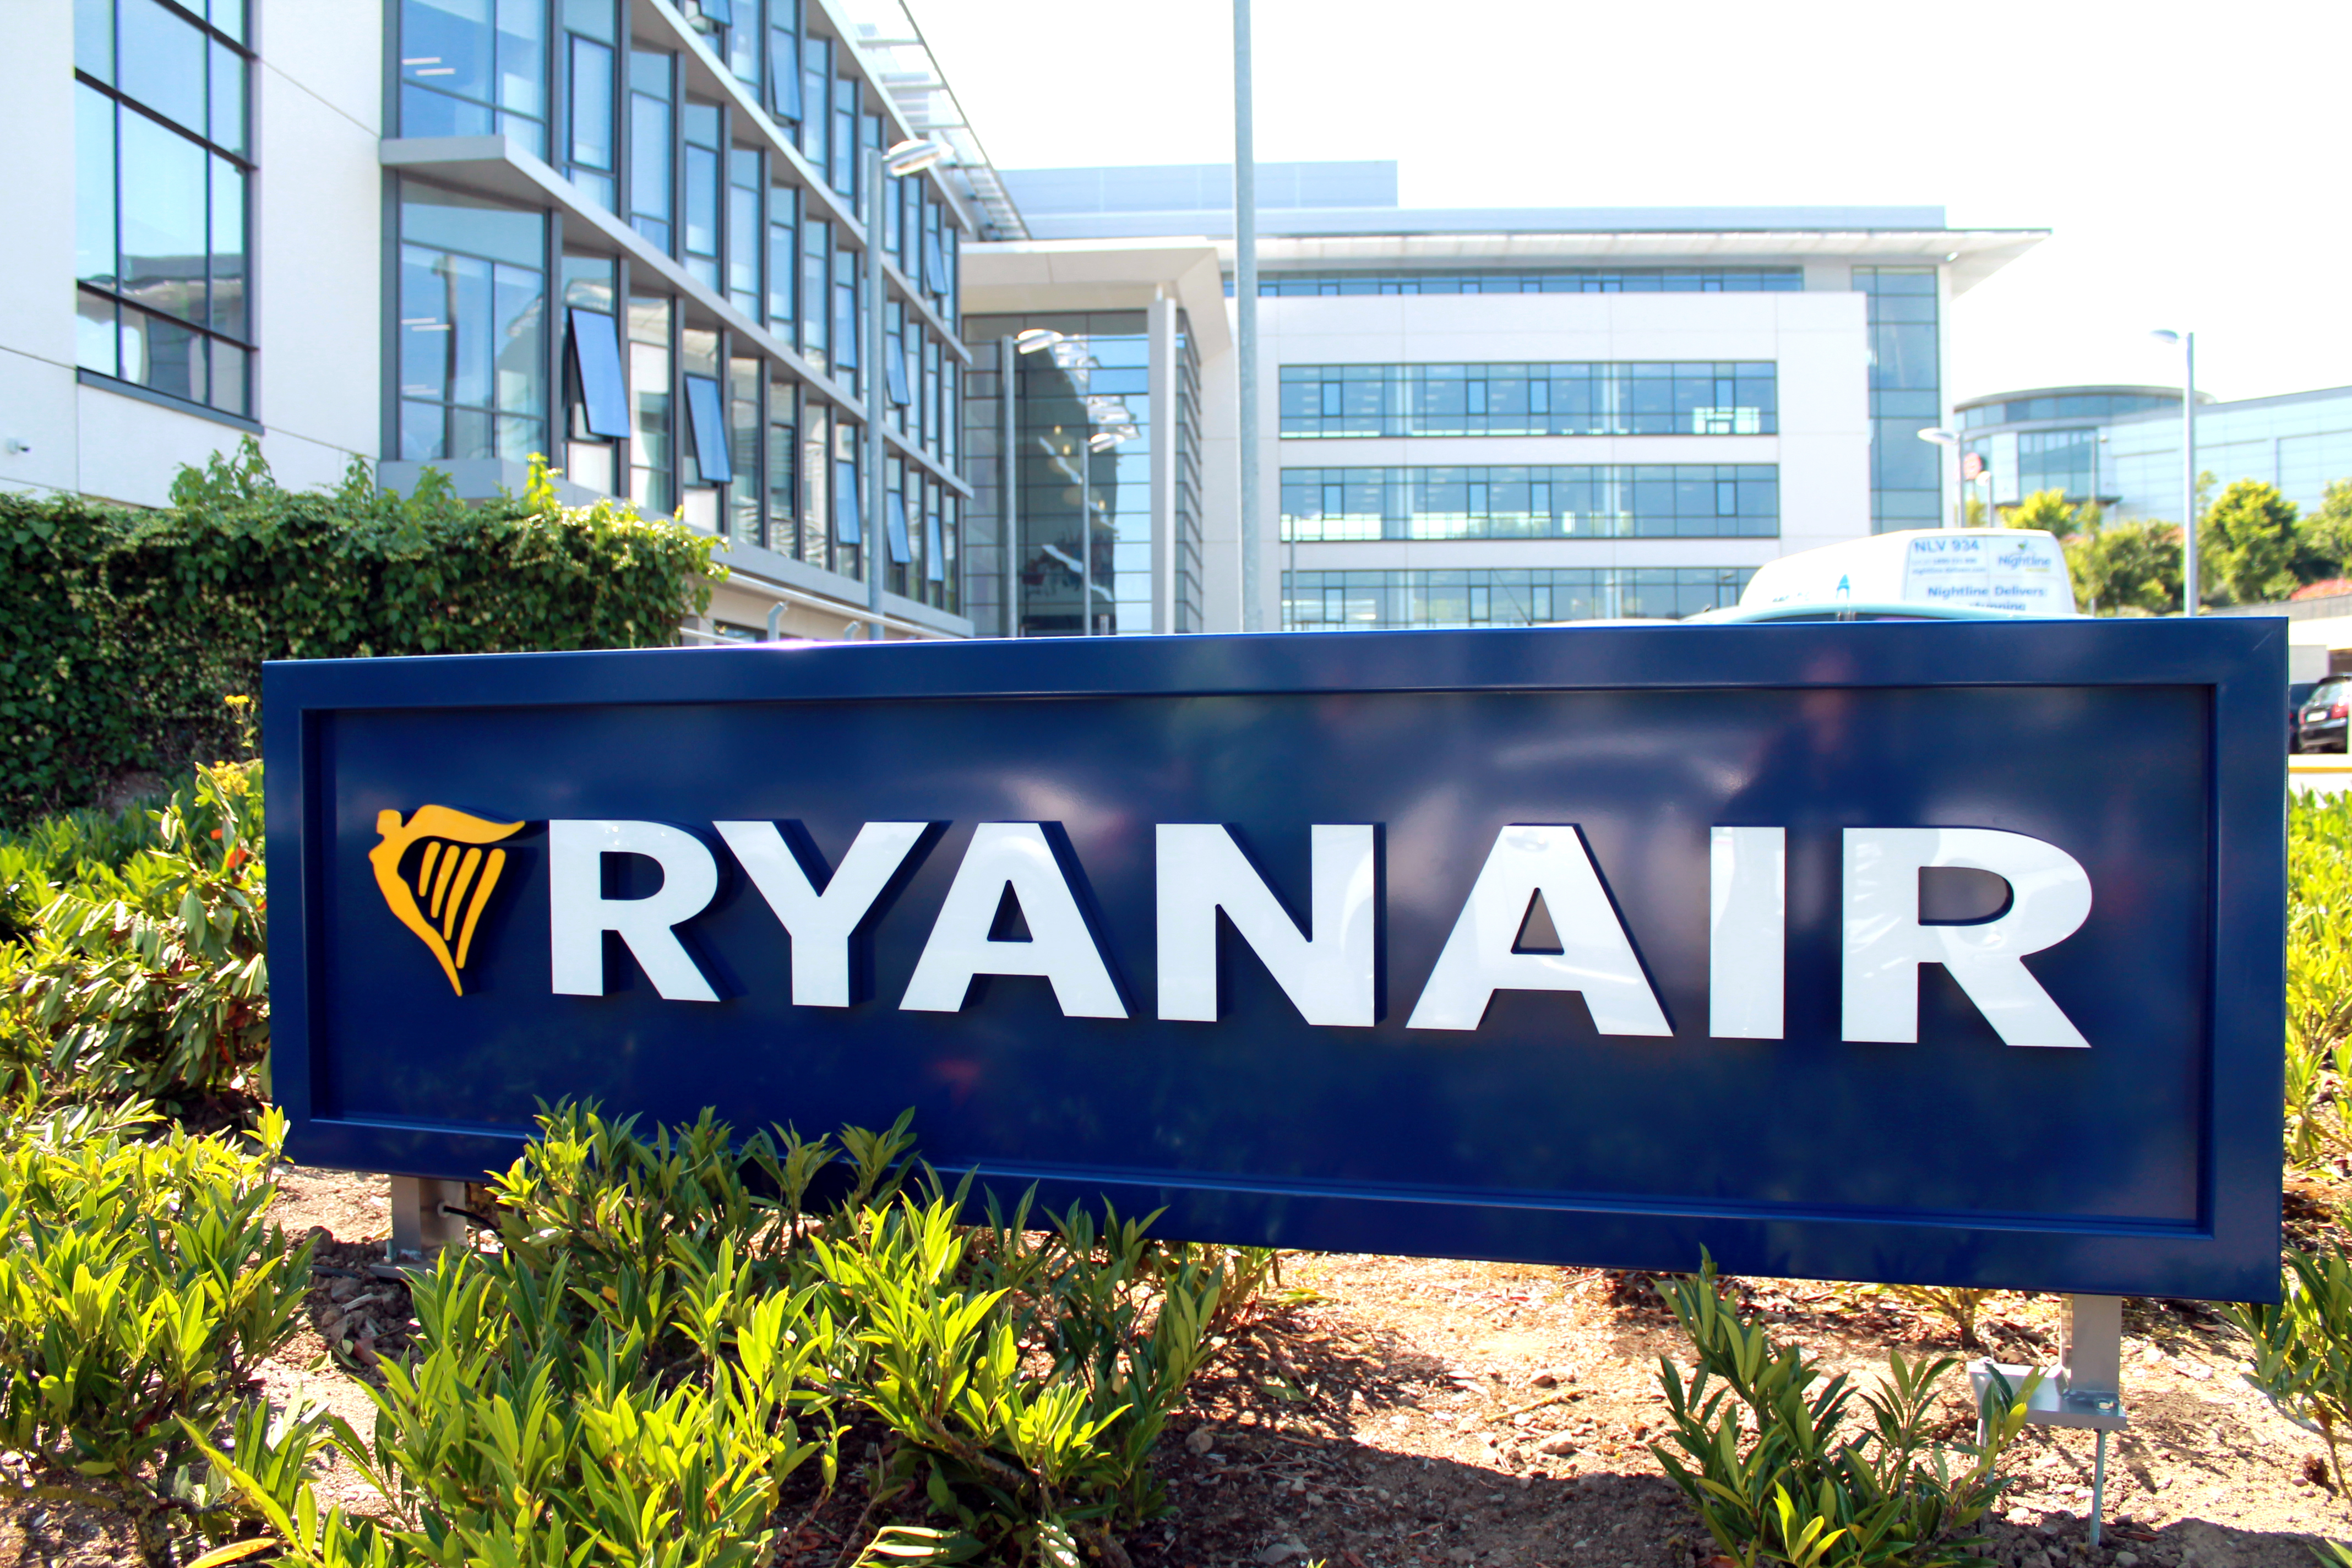 Ryanair Dec Traffic Grows 12% To 10.3m Customers